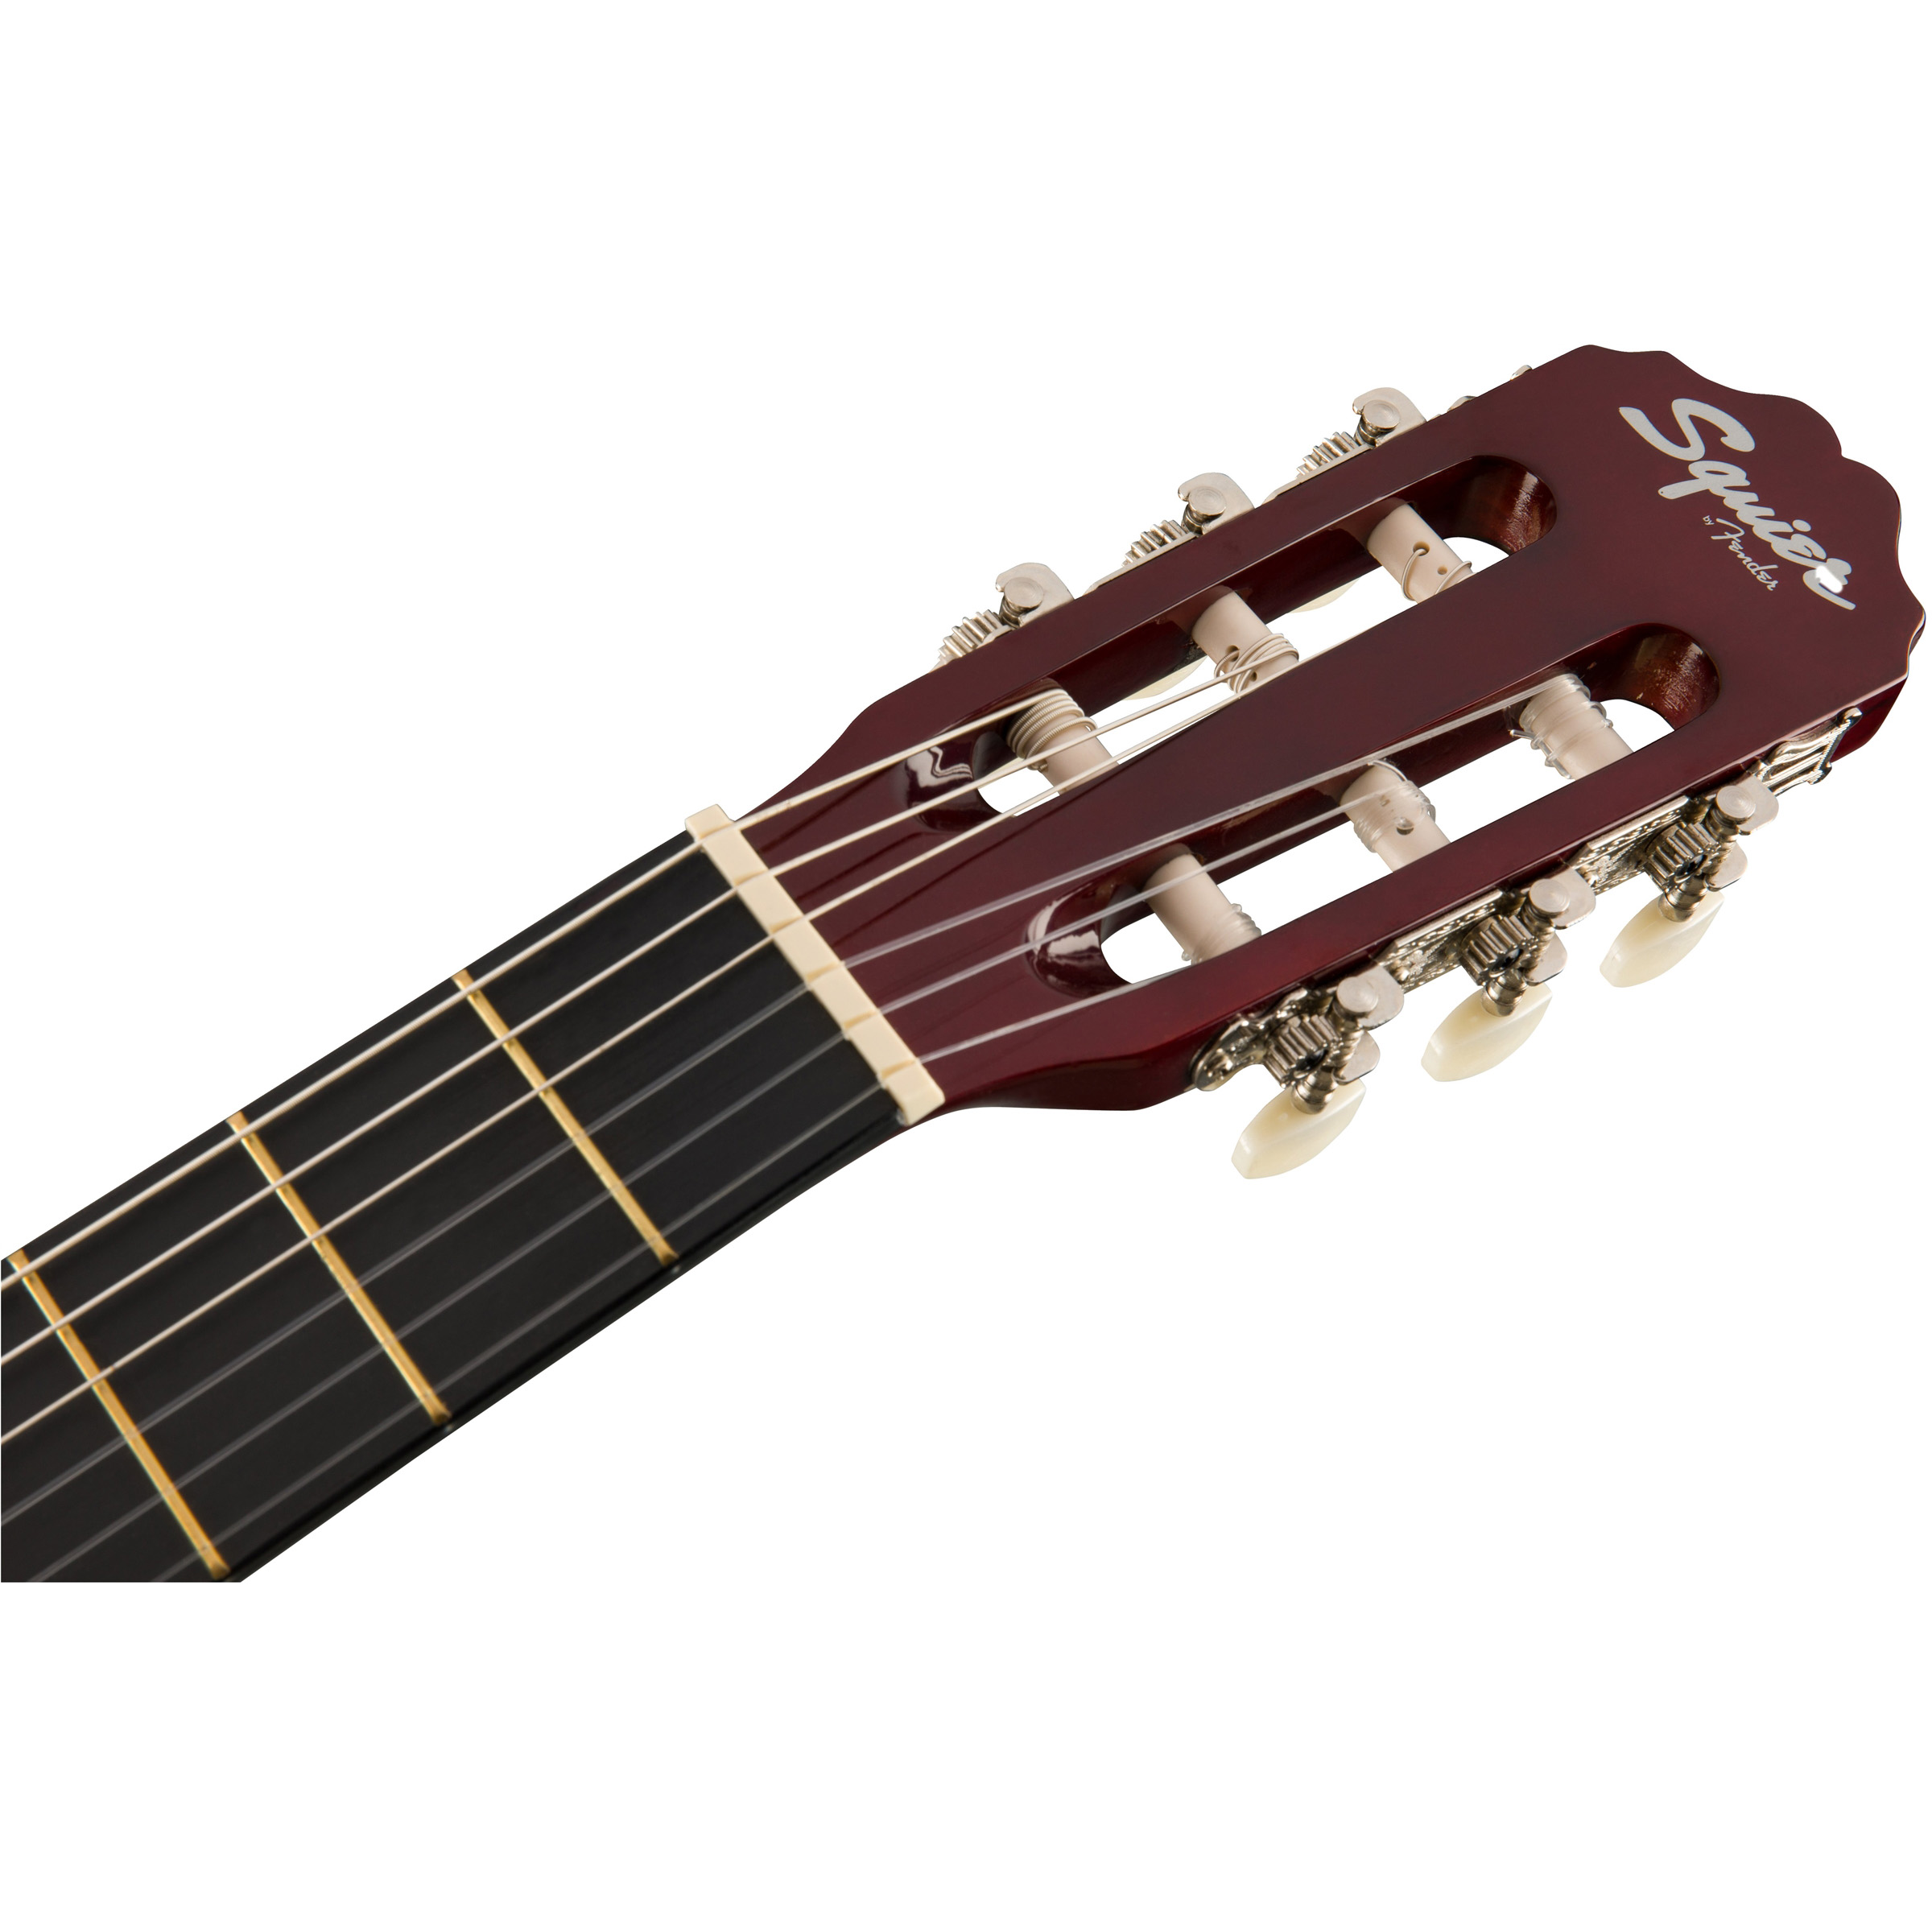 Fender SQUIER SA-150N CLASSICAL, NAT Классические гитары